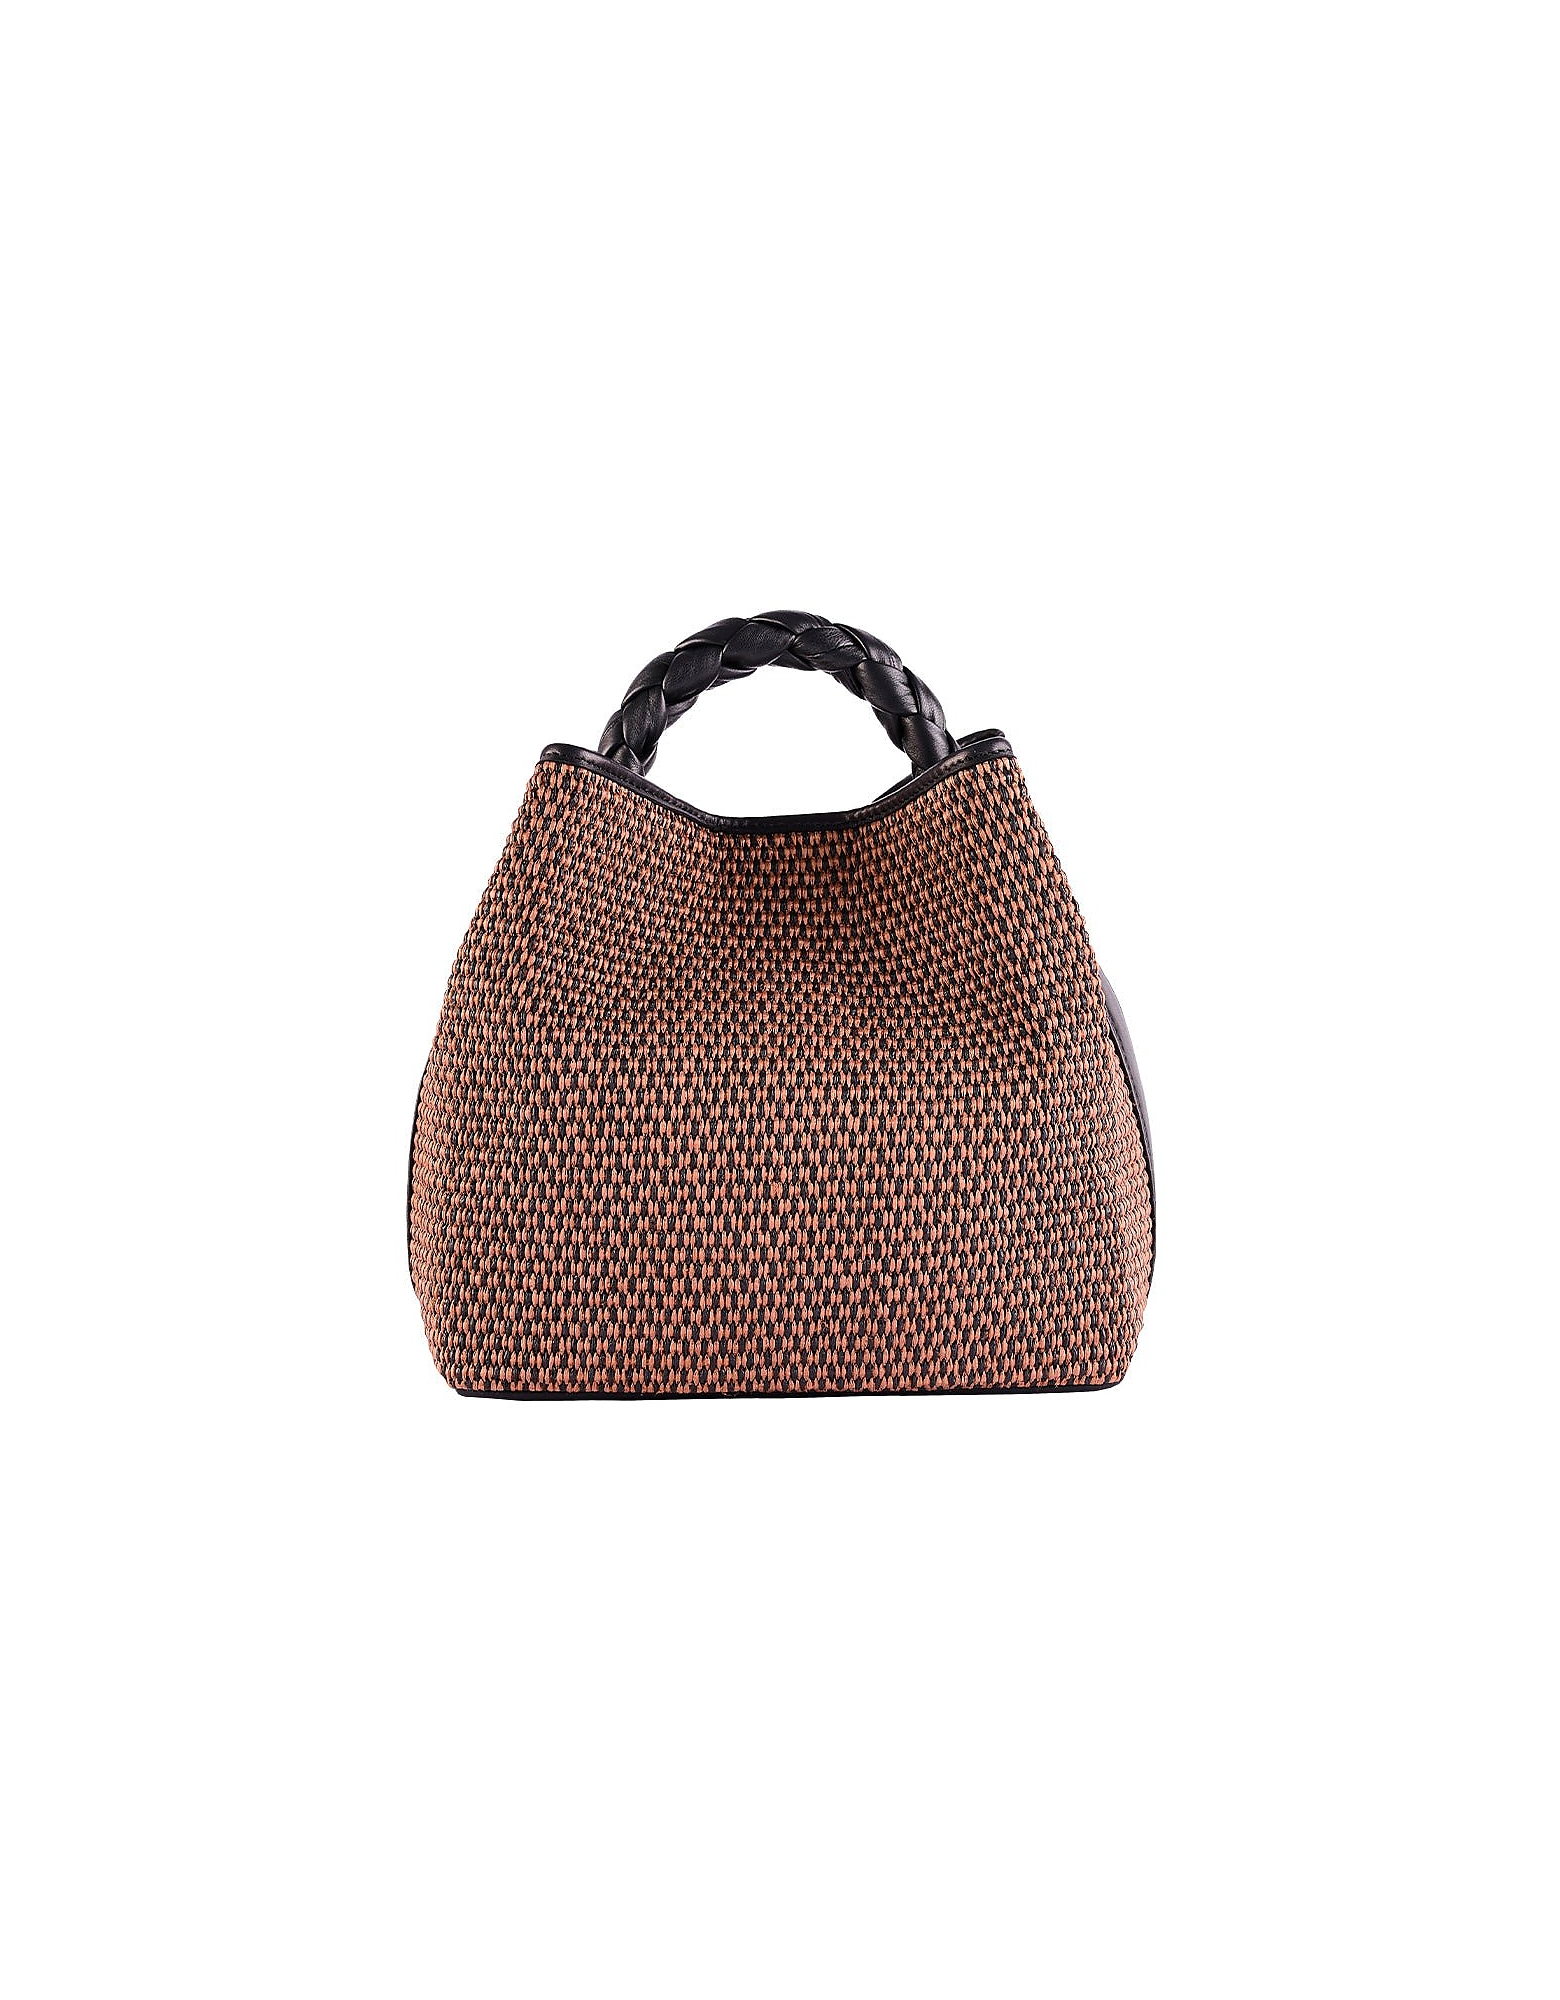 Viamailbag Designer Handbags Coral Nomad - Natural And Black Top Handle Bag In Blue